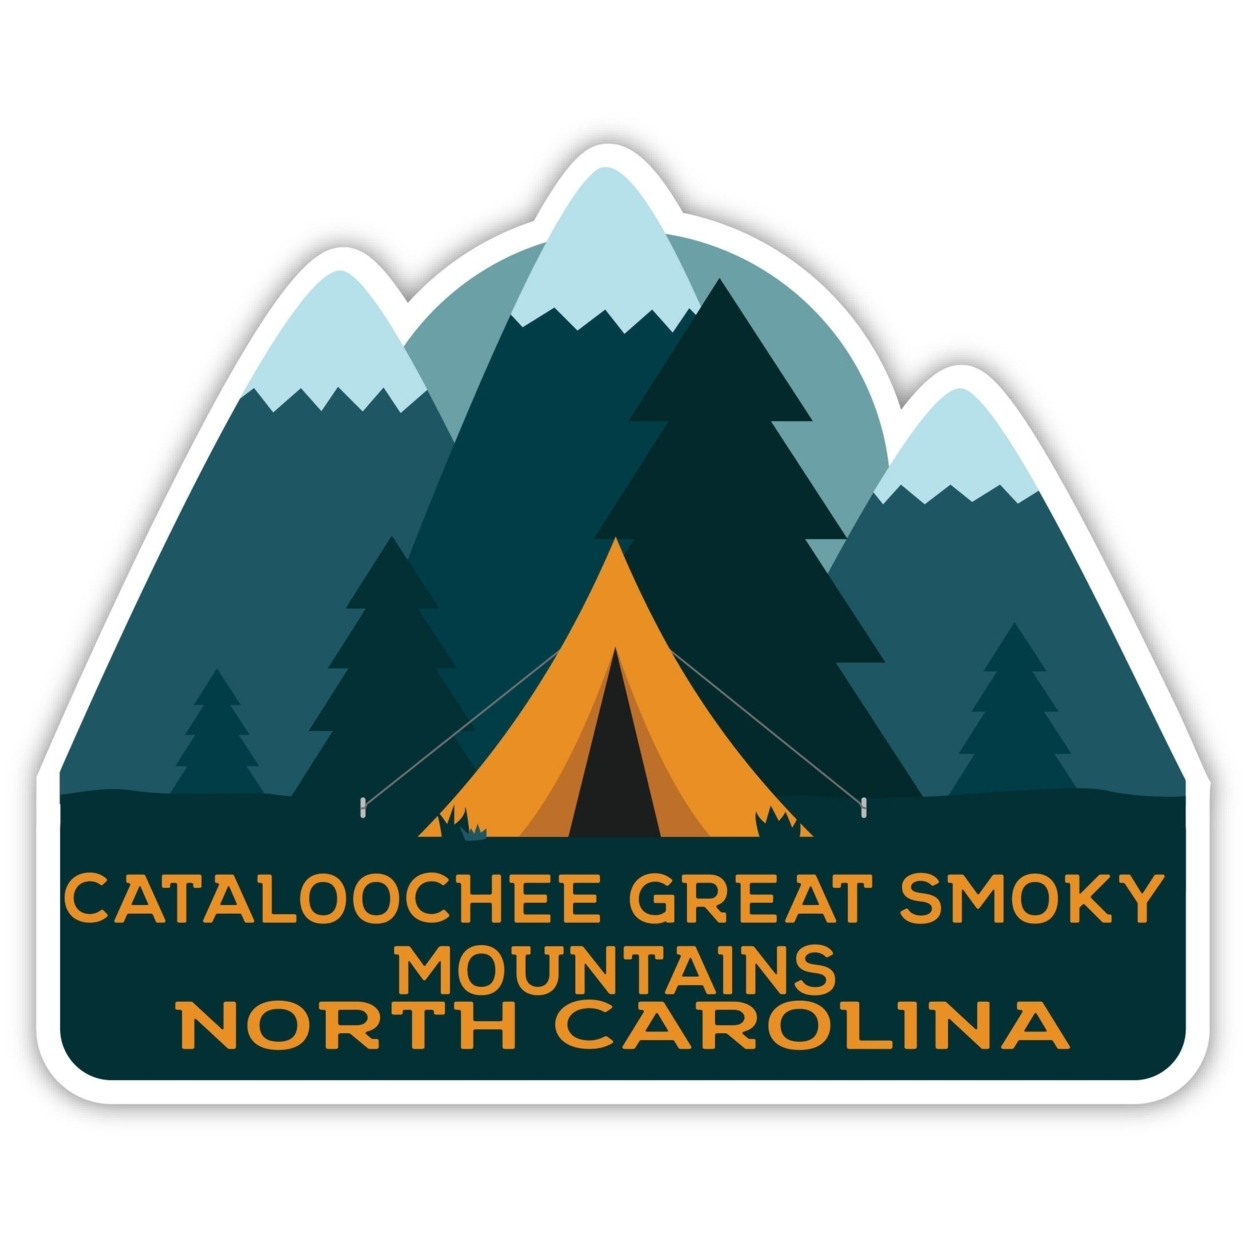 Cataloochee Great Smoky Mountains North Carolina Souvenir Decorative Stickers (Choose Theme And Size) - Single Unit, 6-Inch, Tent